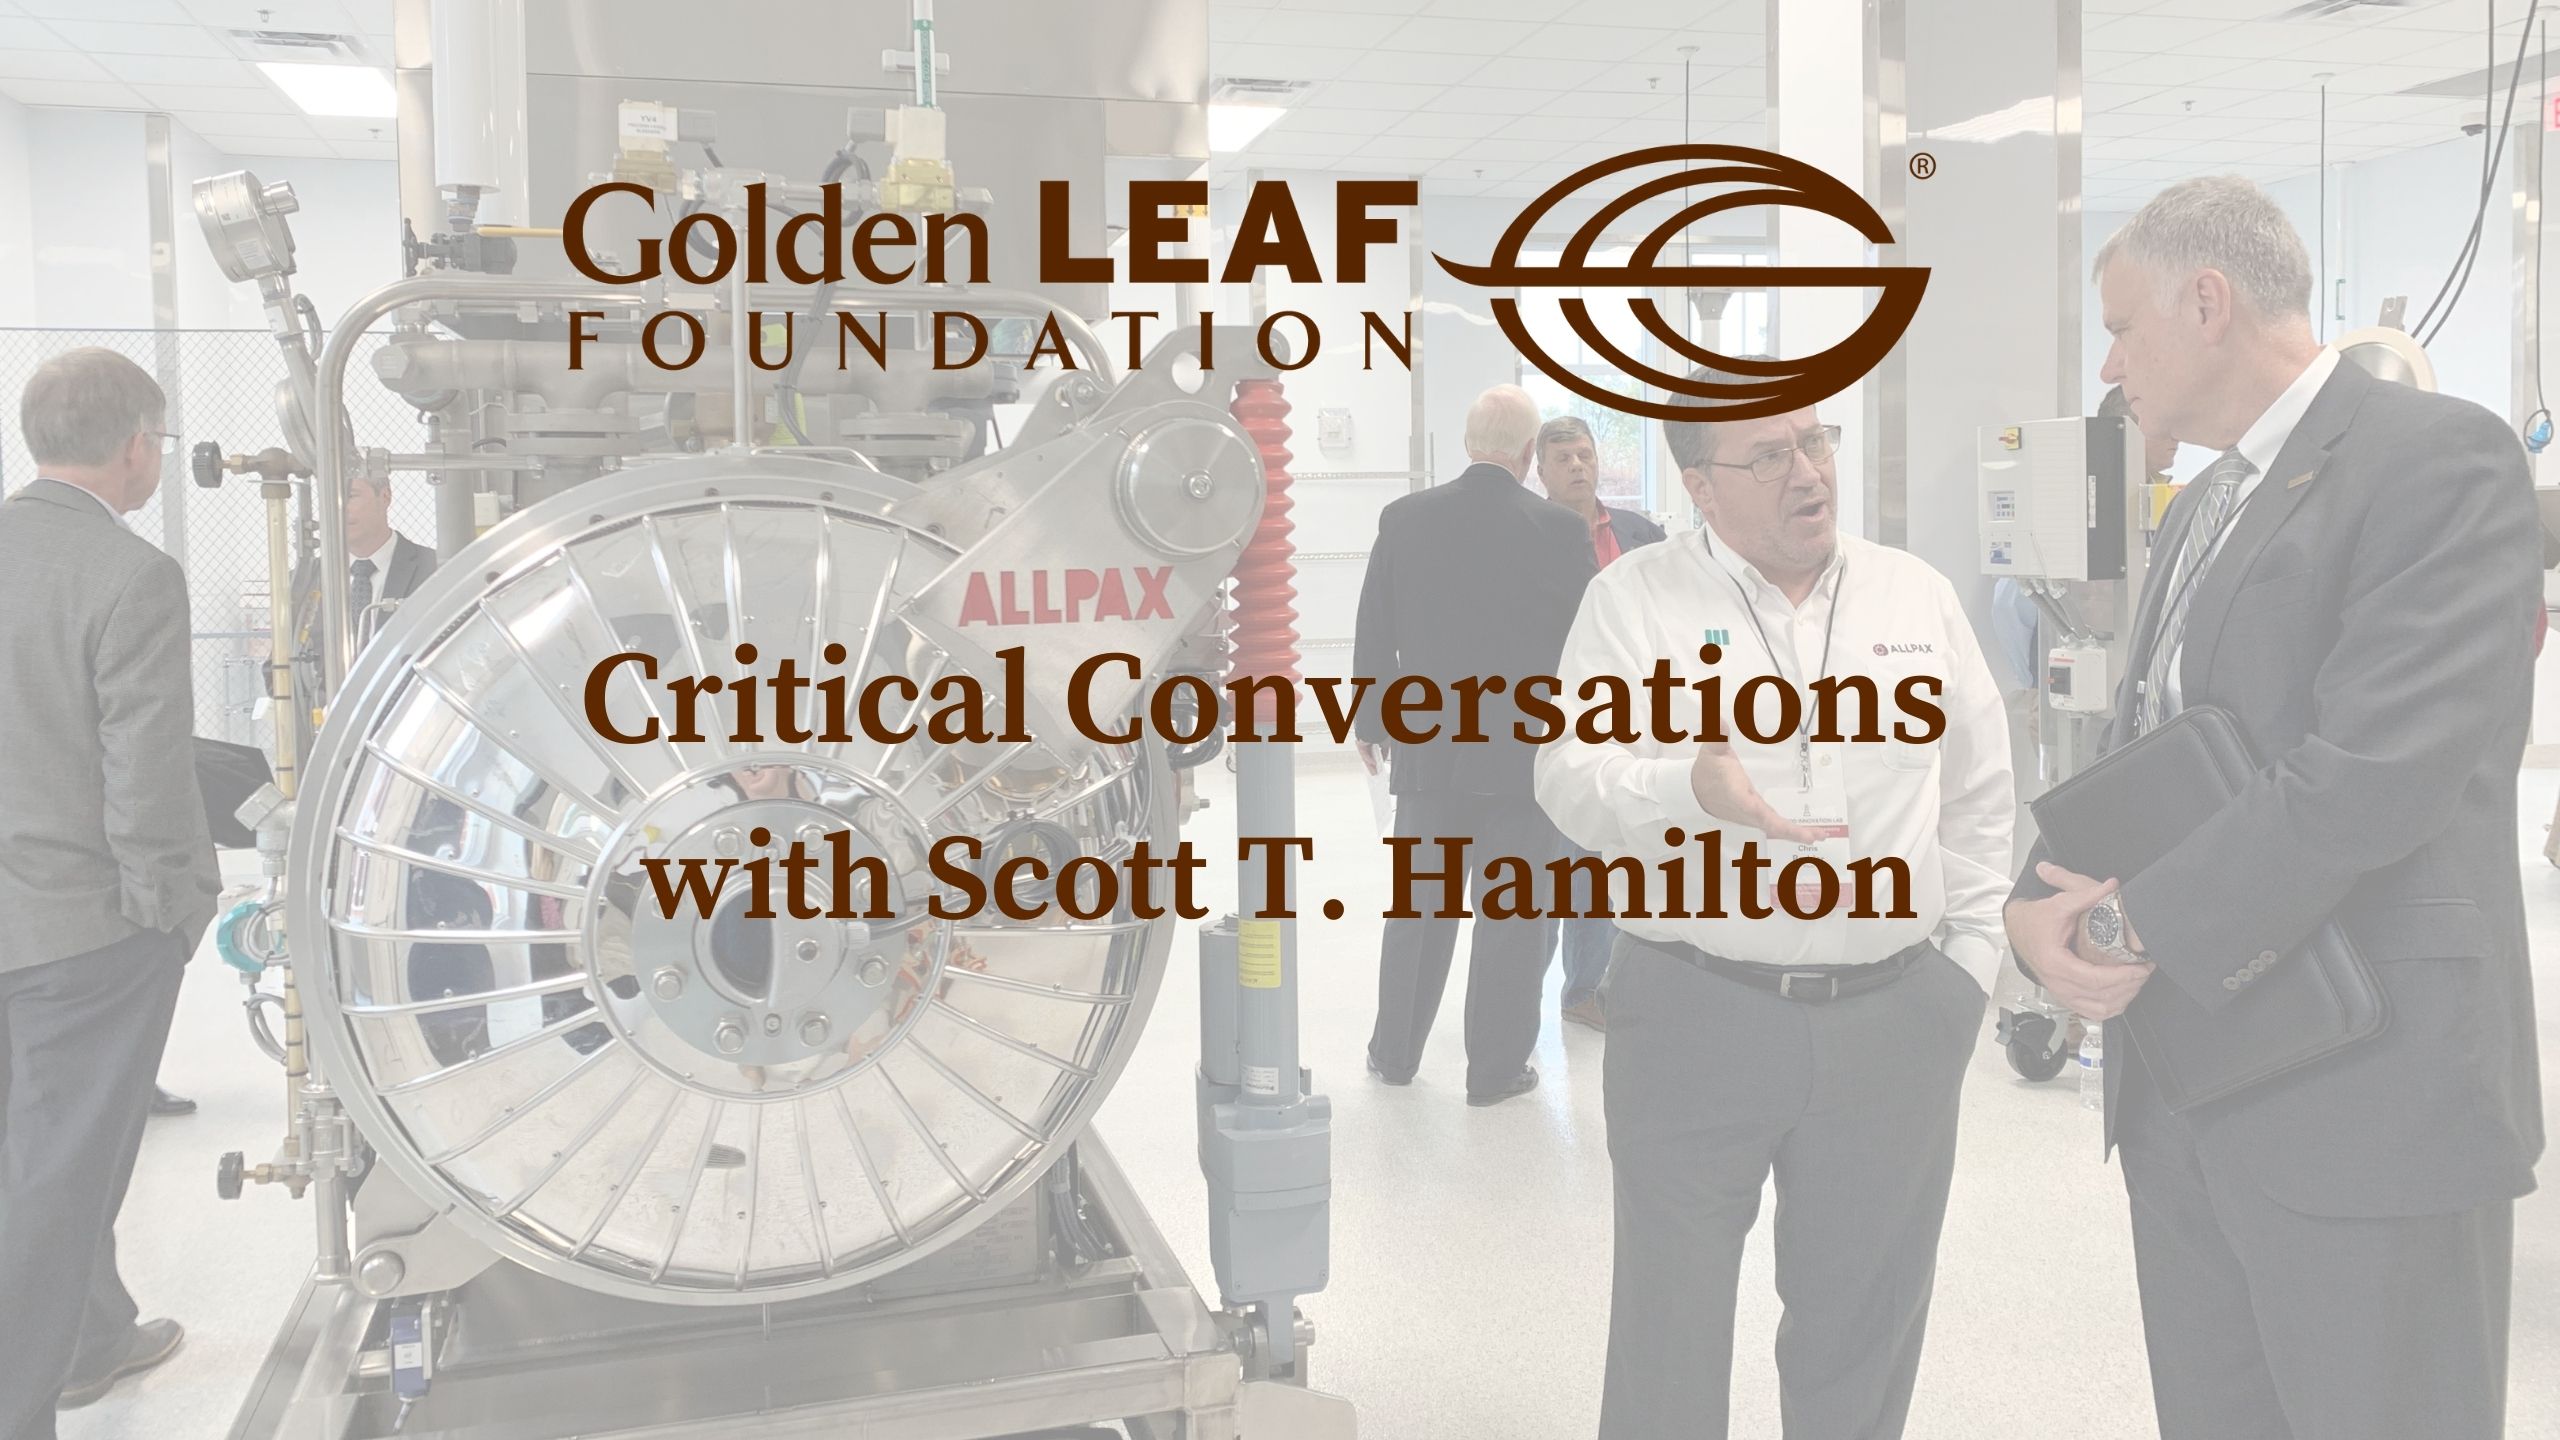 Critical Conversations with Scott T. Hamilton featuring Dr. Michael Walden